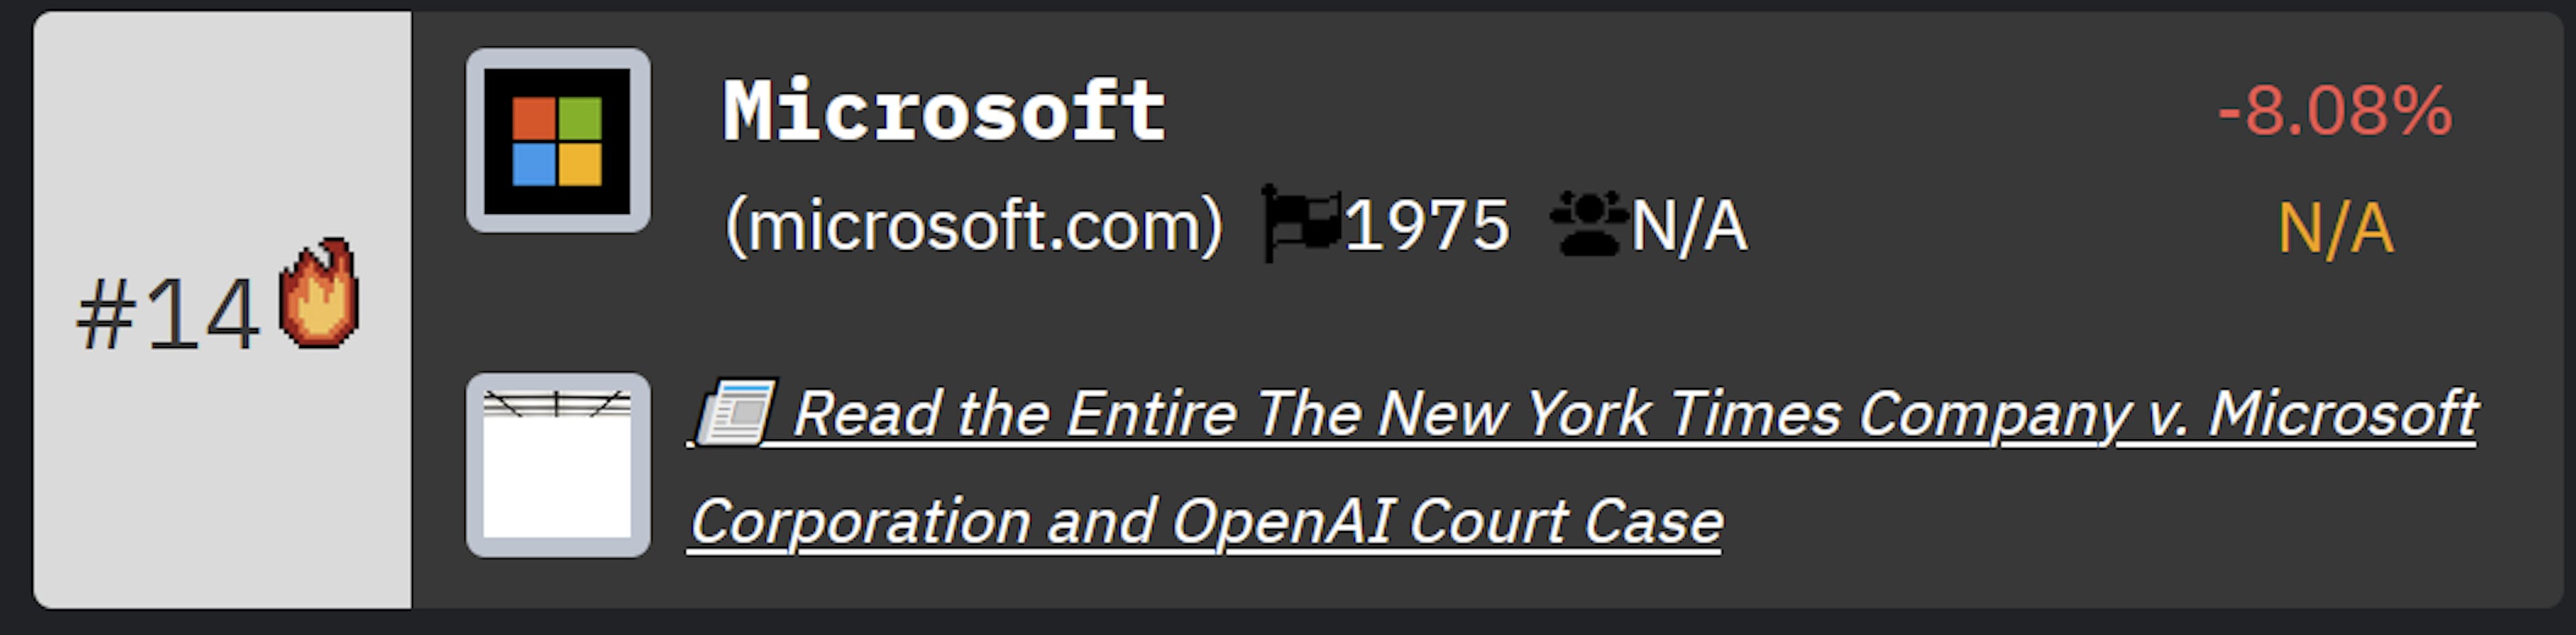 Microsoft Rank on HackerNoon